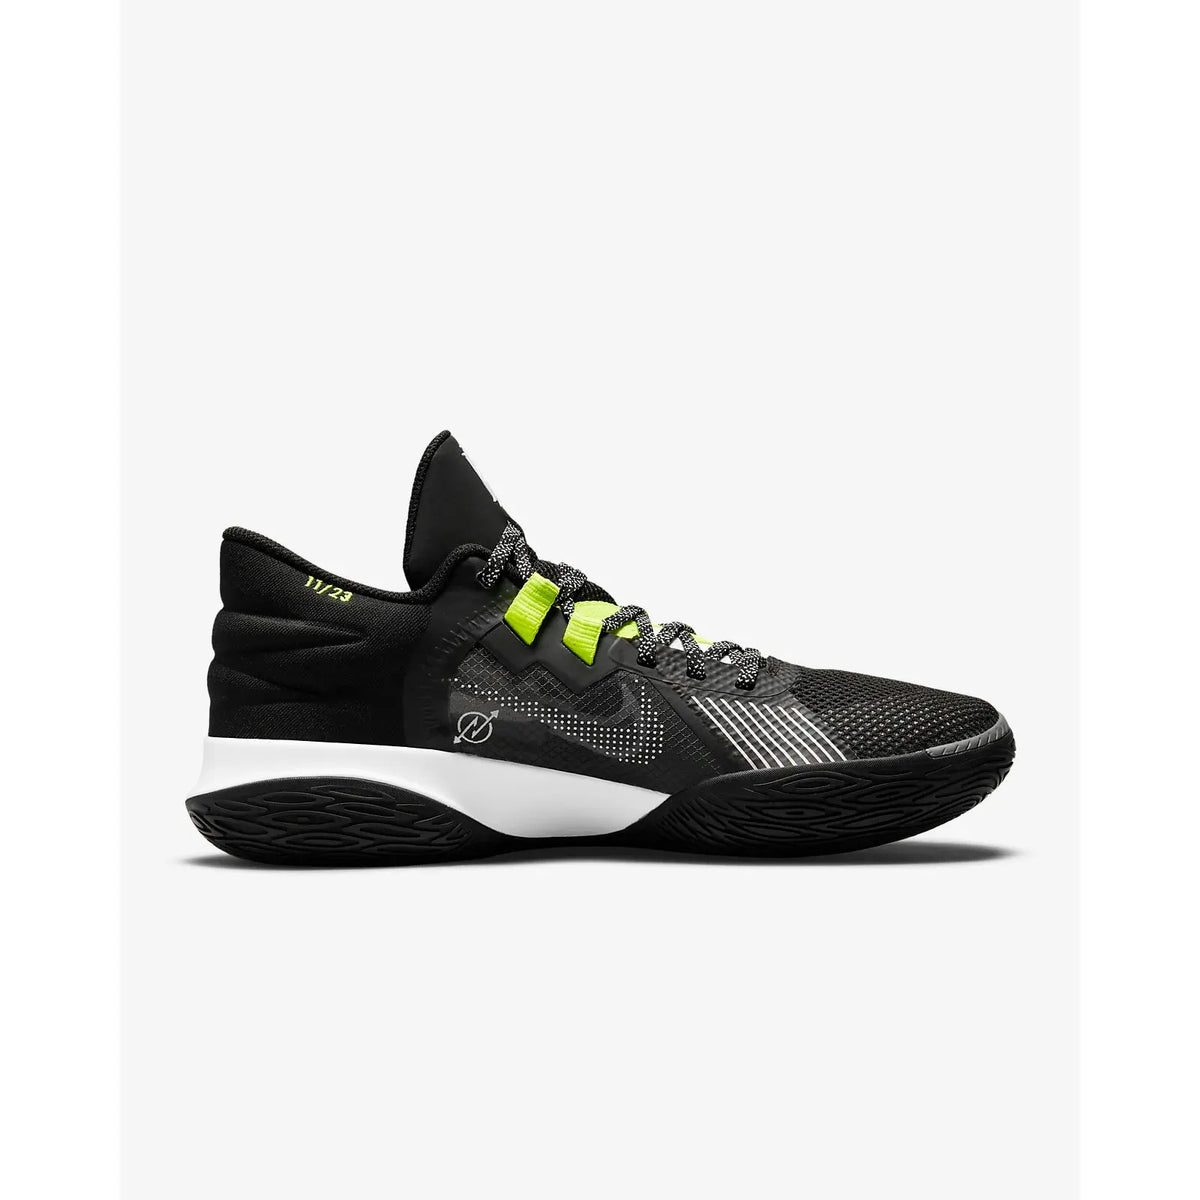 Nike Kyrie Flytrap 5 basketbalschoenen zwart